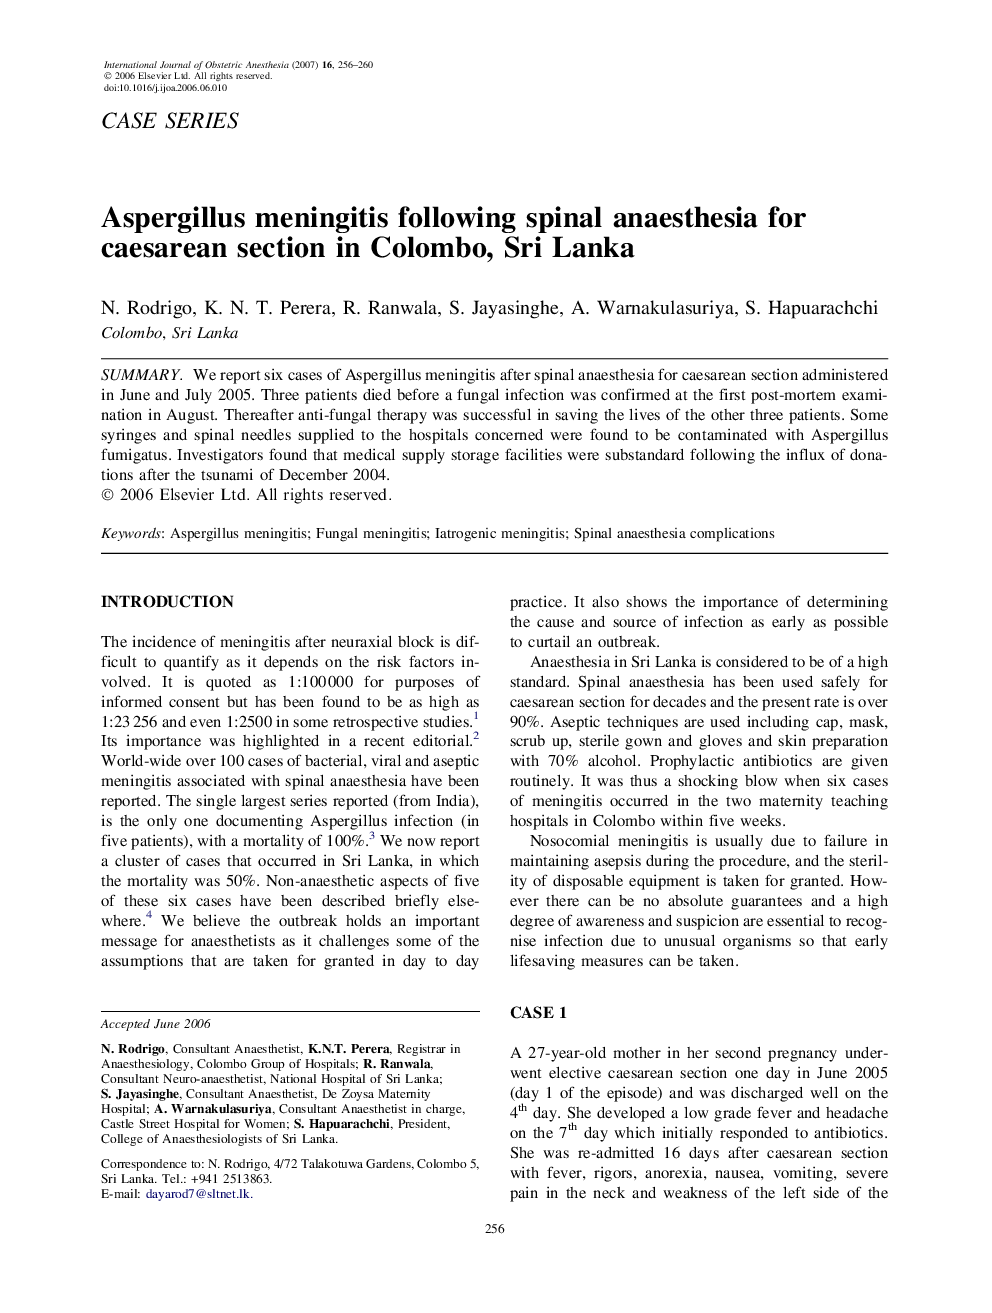 Aspergillus meningitis following spinal anaesthesia for caesarean section in Colombo, Sri Lanka